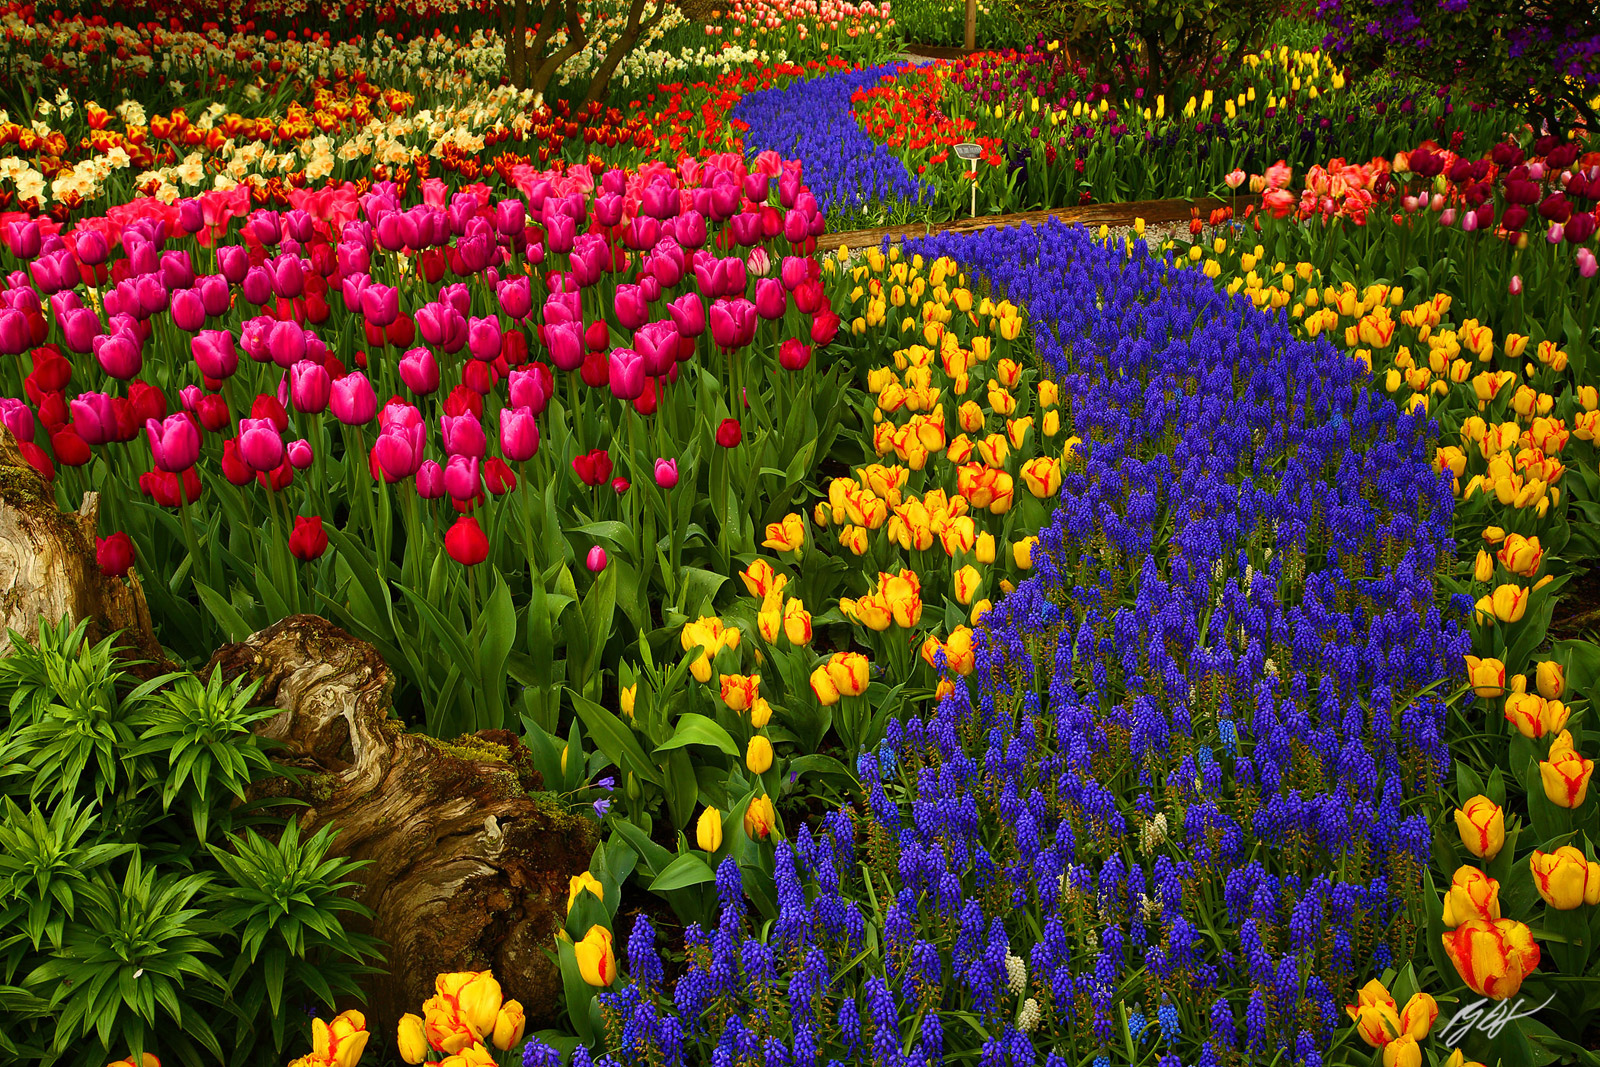 Hyacinth Row in the Tulips in Roozengaarde Garden in Skagit Valley in Washington